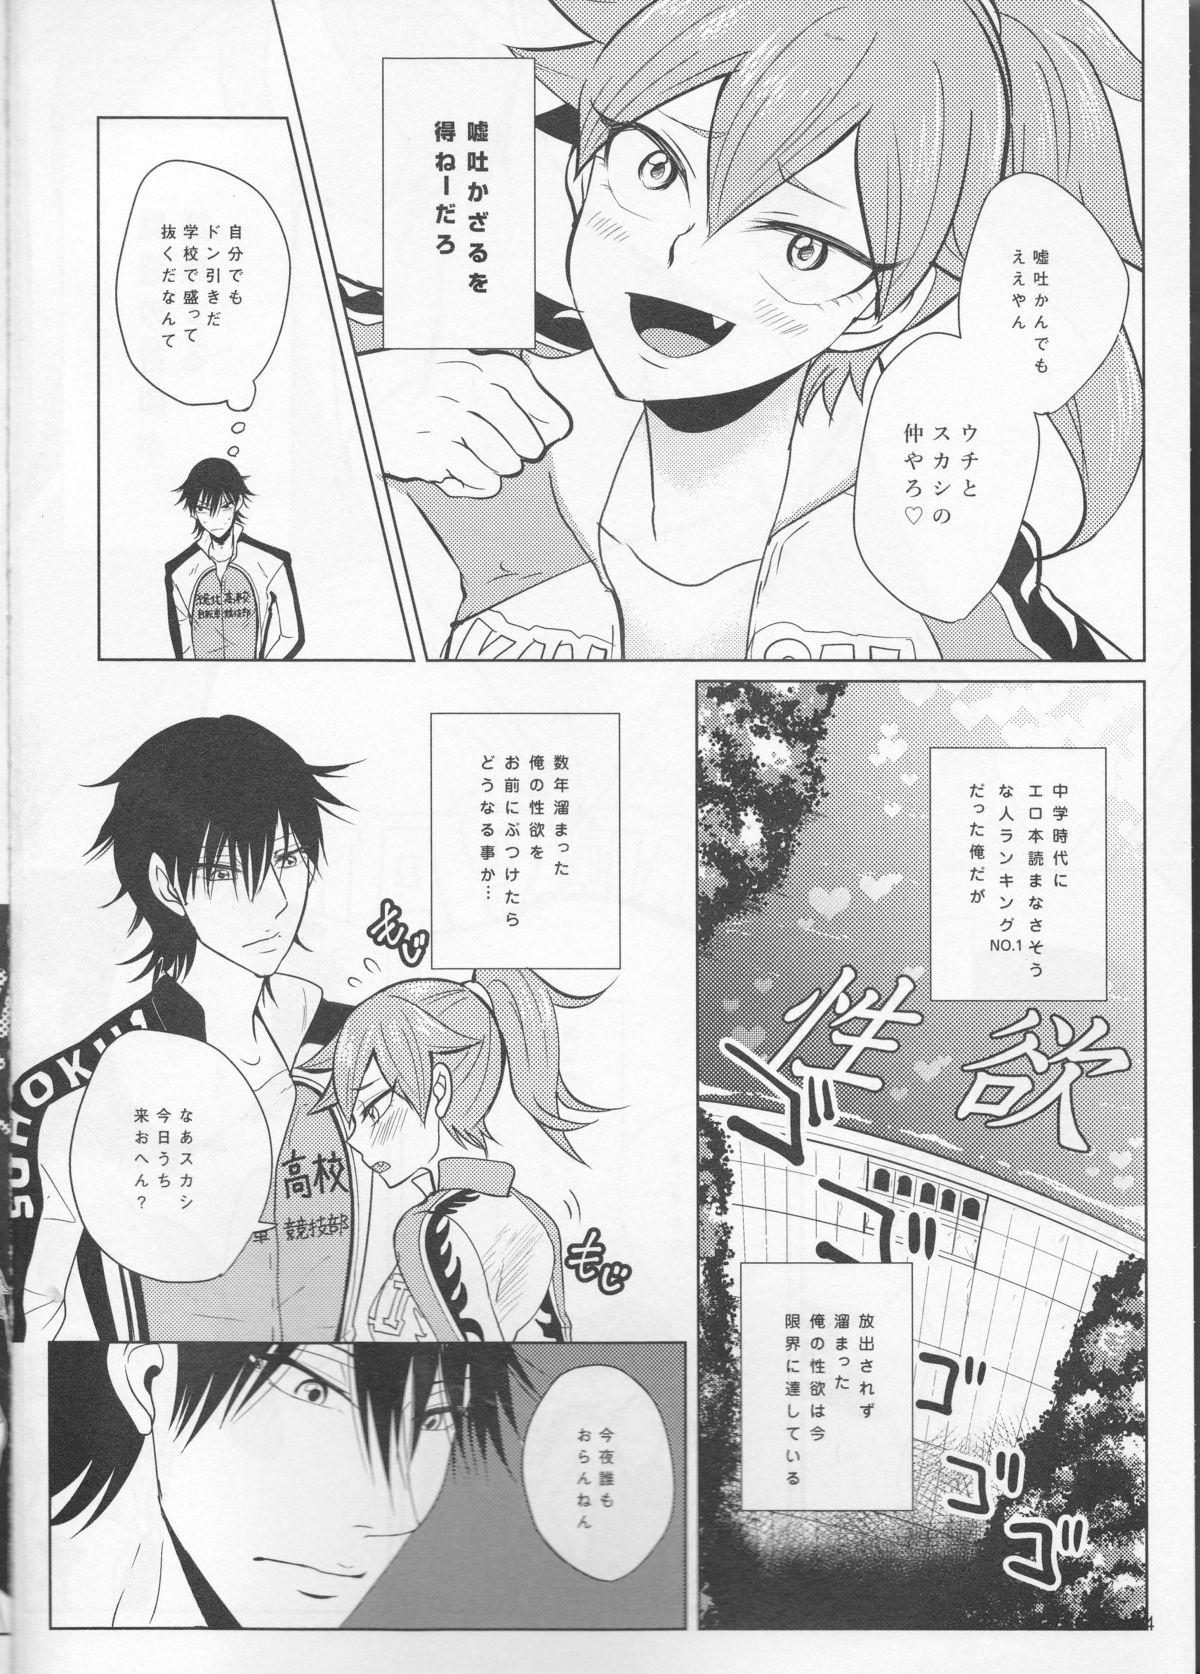 Analfucking boy meets OPI - Yowamushi pedal Fantasy Massage - Page 4